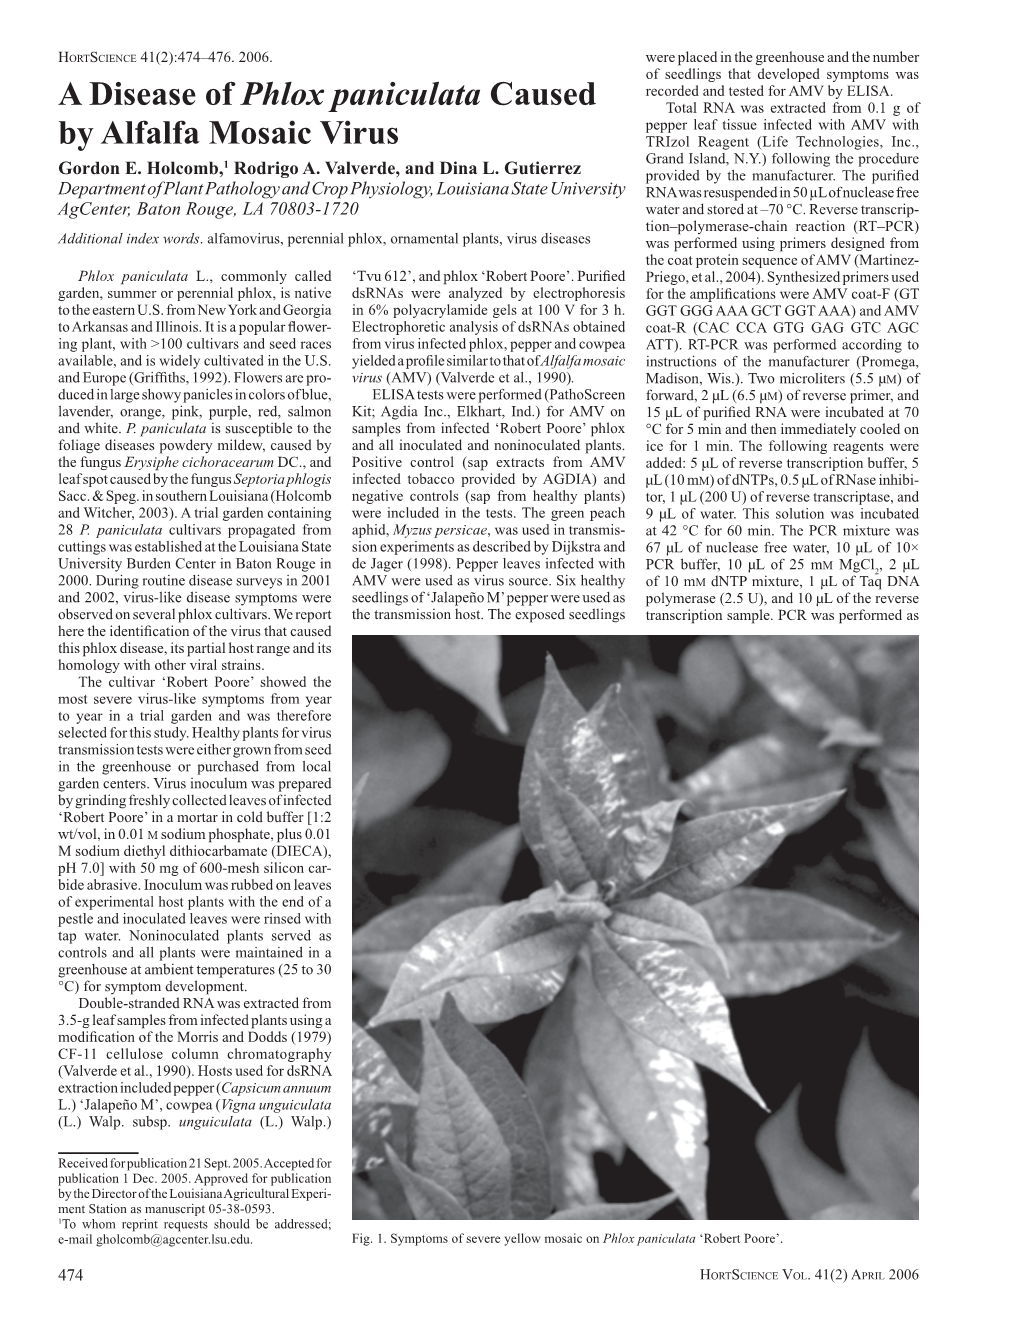 A Disease of Phlox Paniculata Caused by Alfalfa Mosaic Virus